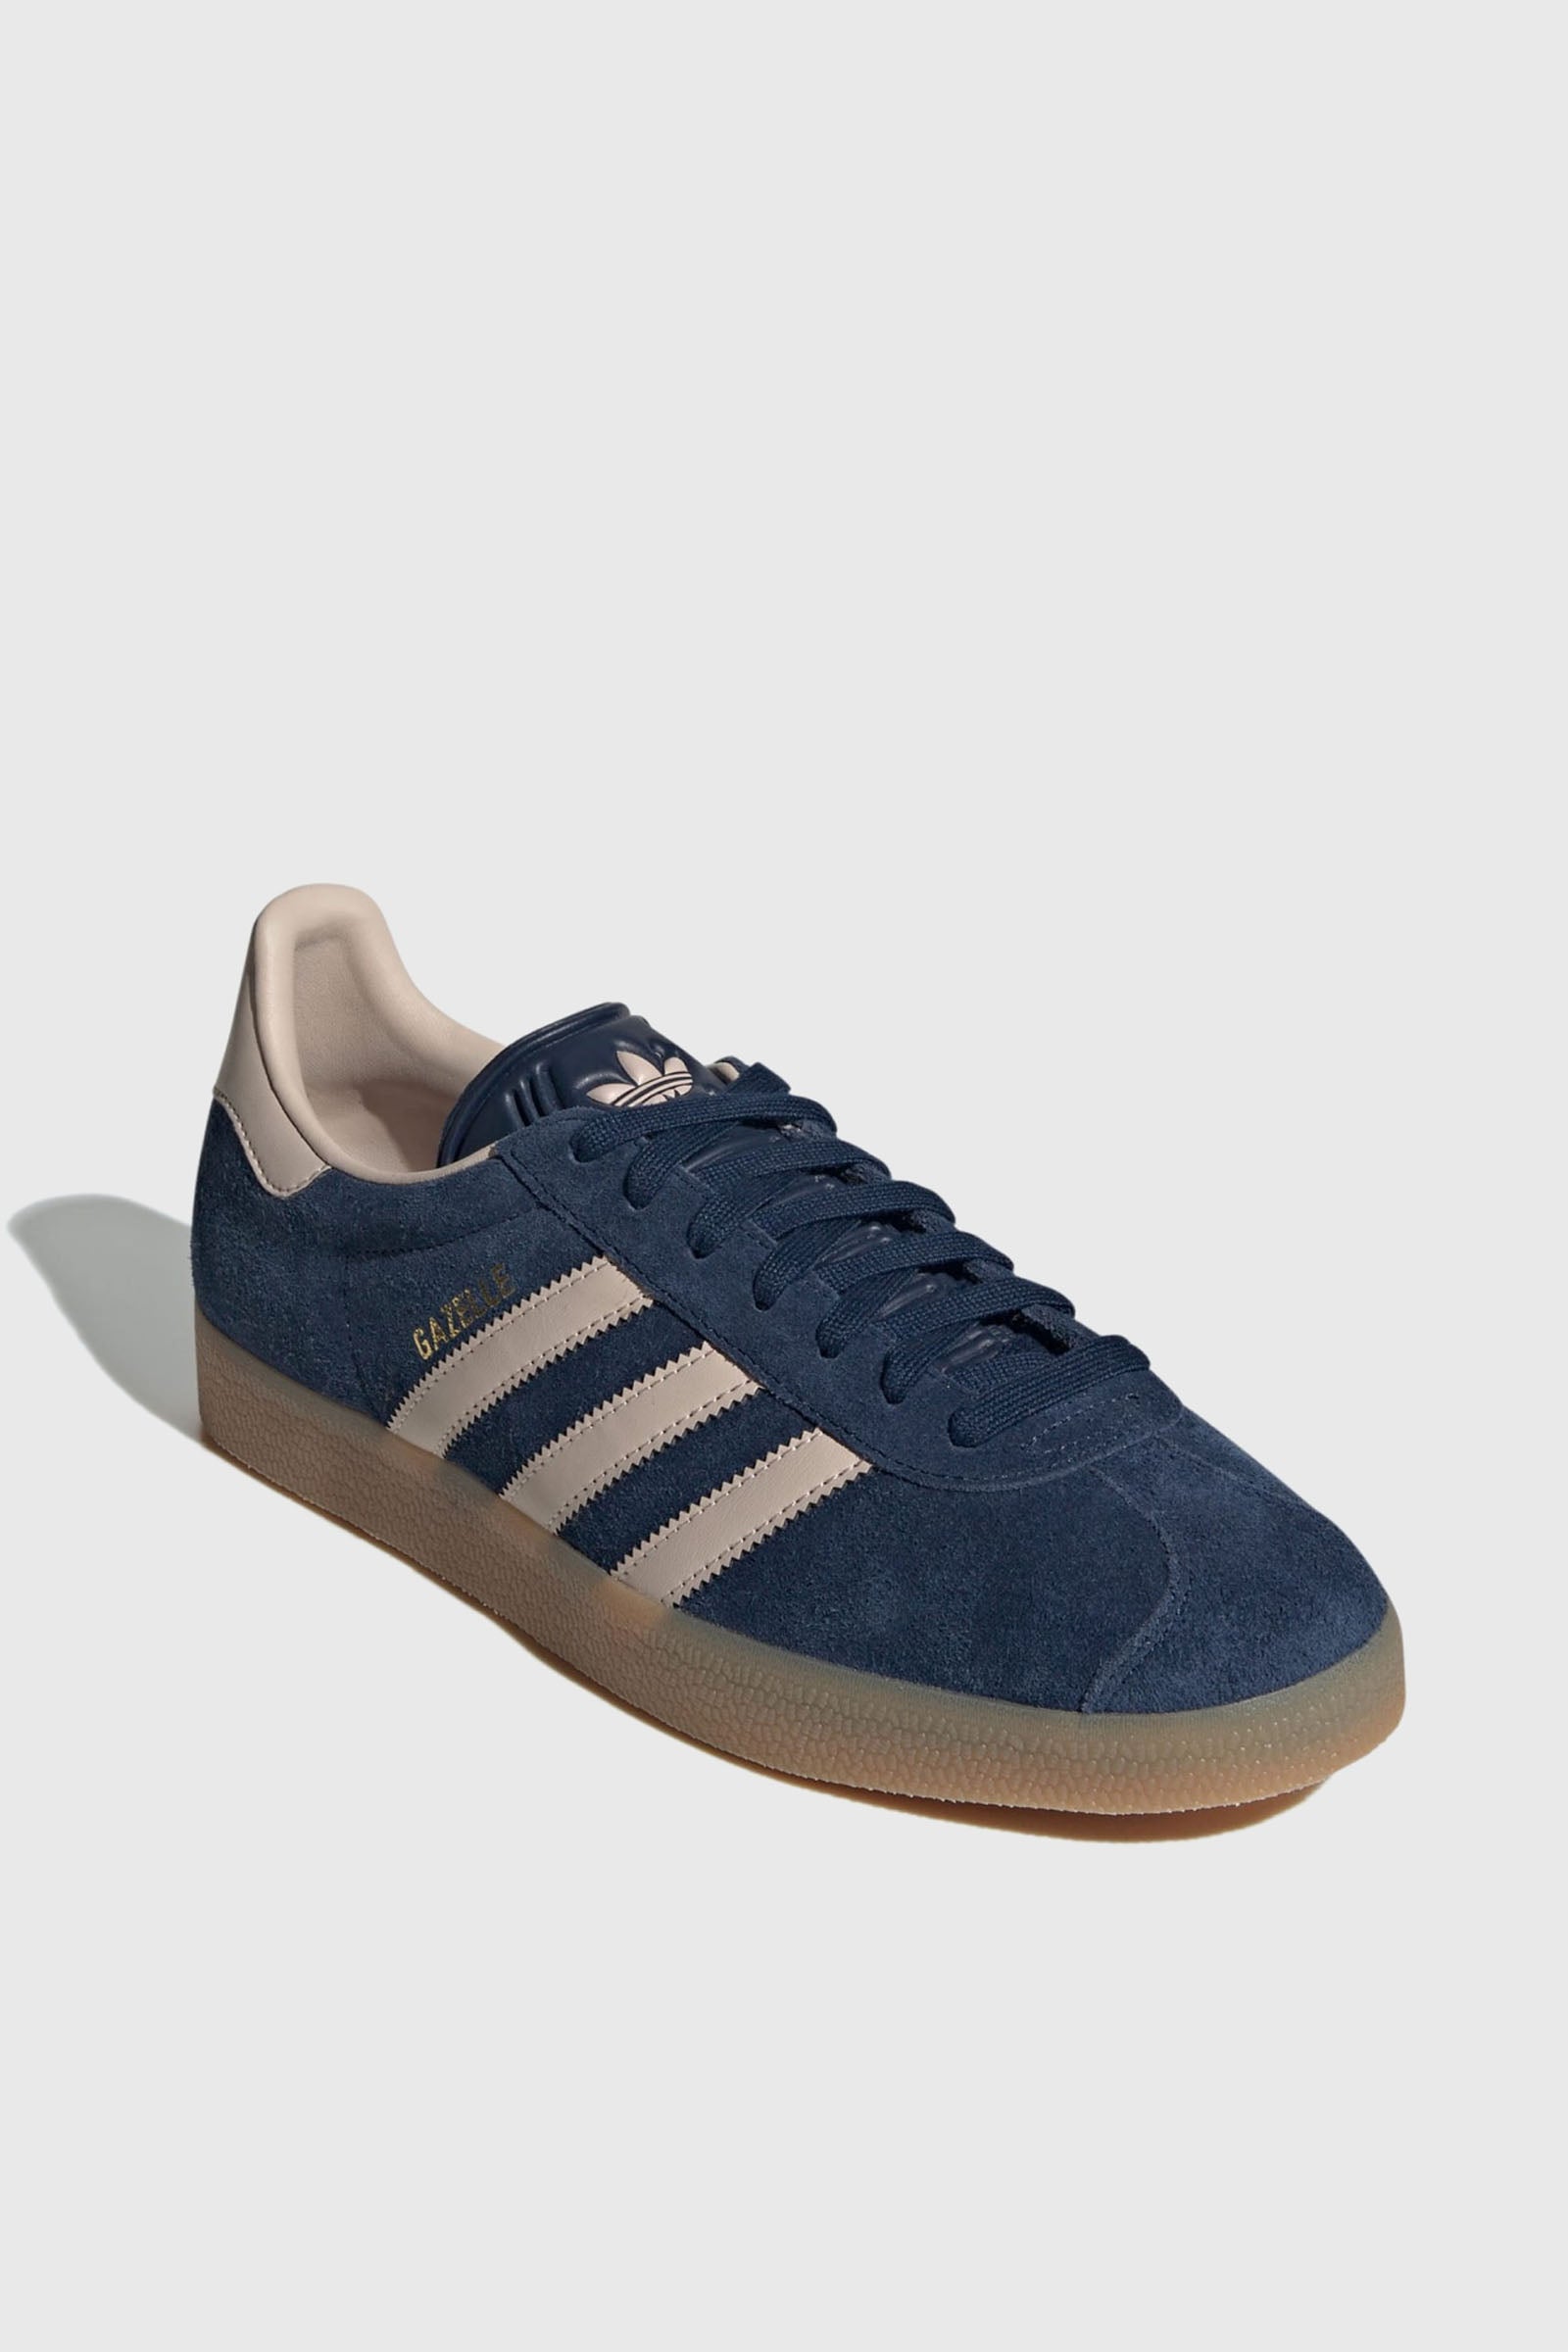 Adidas Originals Synthetic Blue Gazelle Sneaker - 4